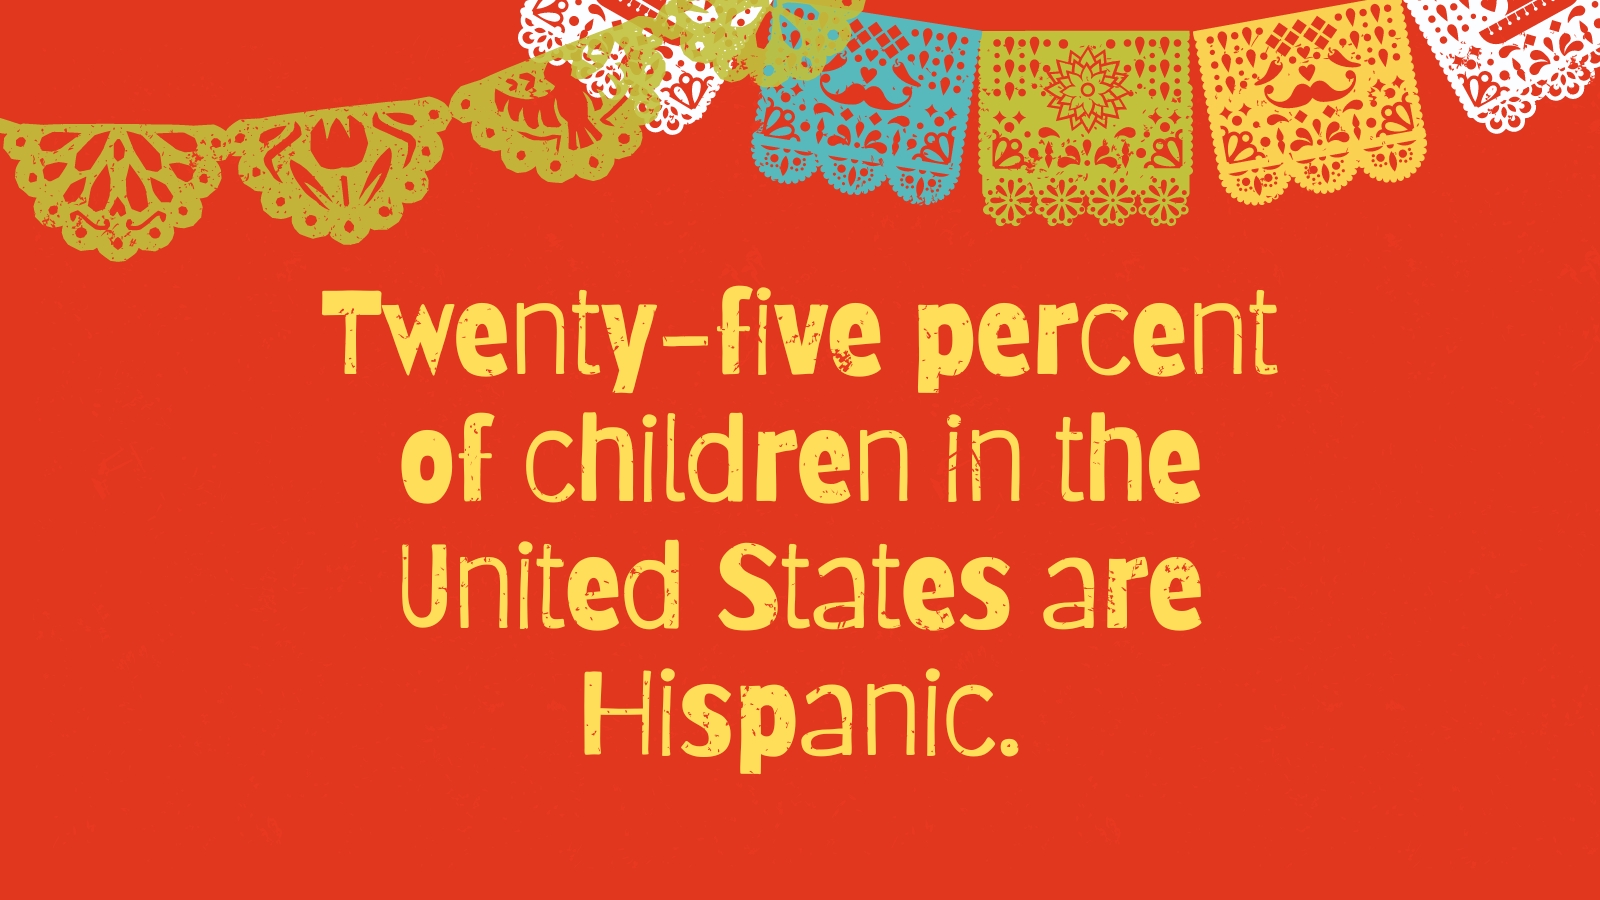 Twenty-five percent of children in the United states are Hispanic.